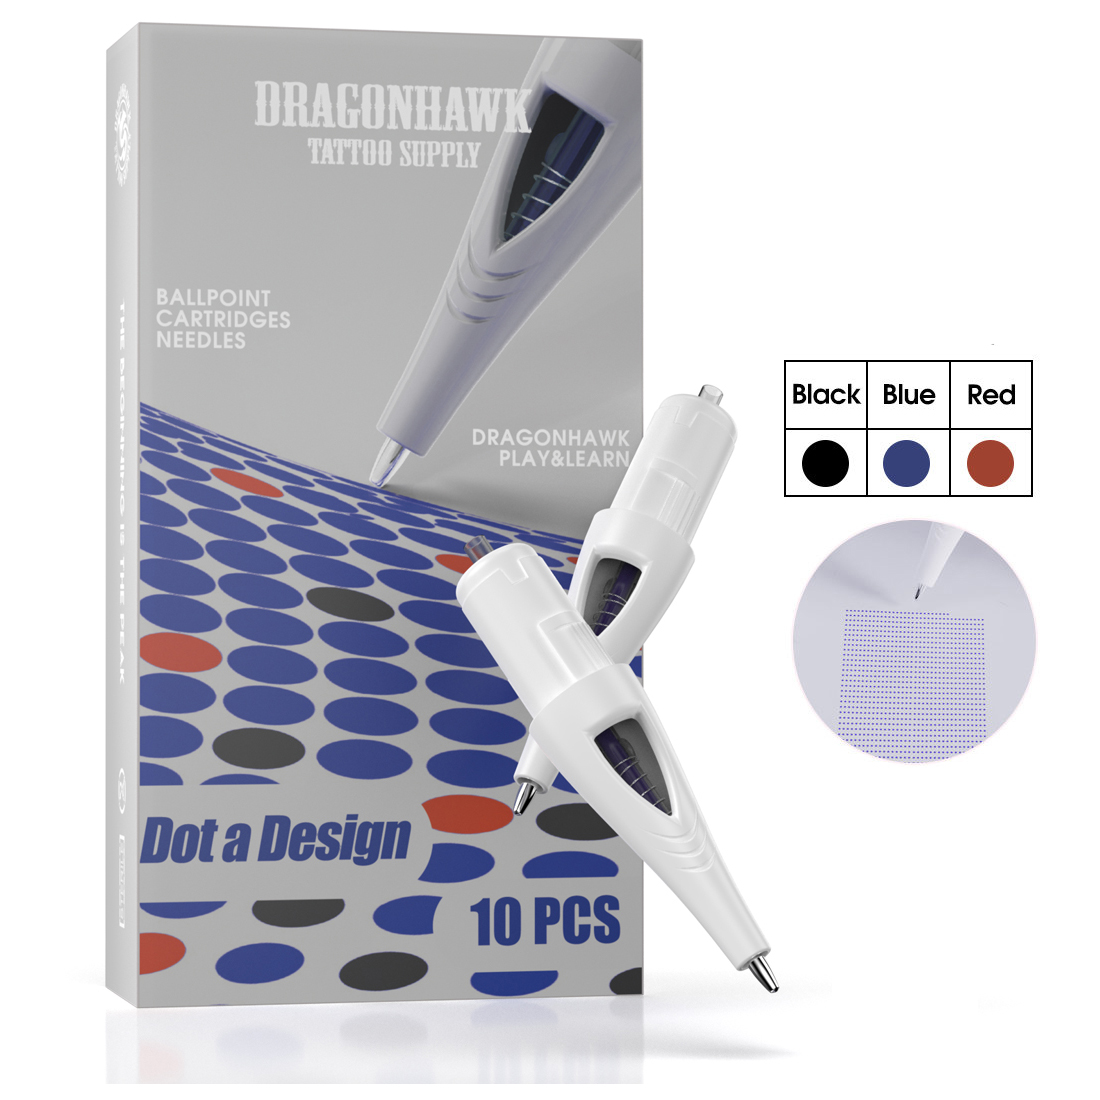 Dragonhawk Ballpoint Cartridge Needles for Tattoo Beginner Practice Toll Multicolor Dotwork YZ-MIX